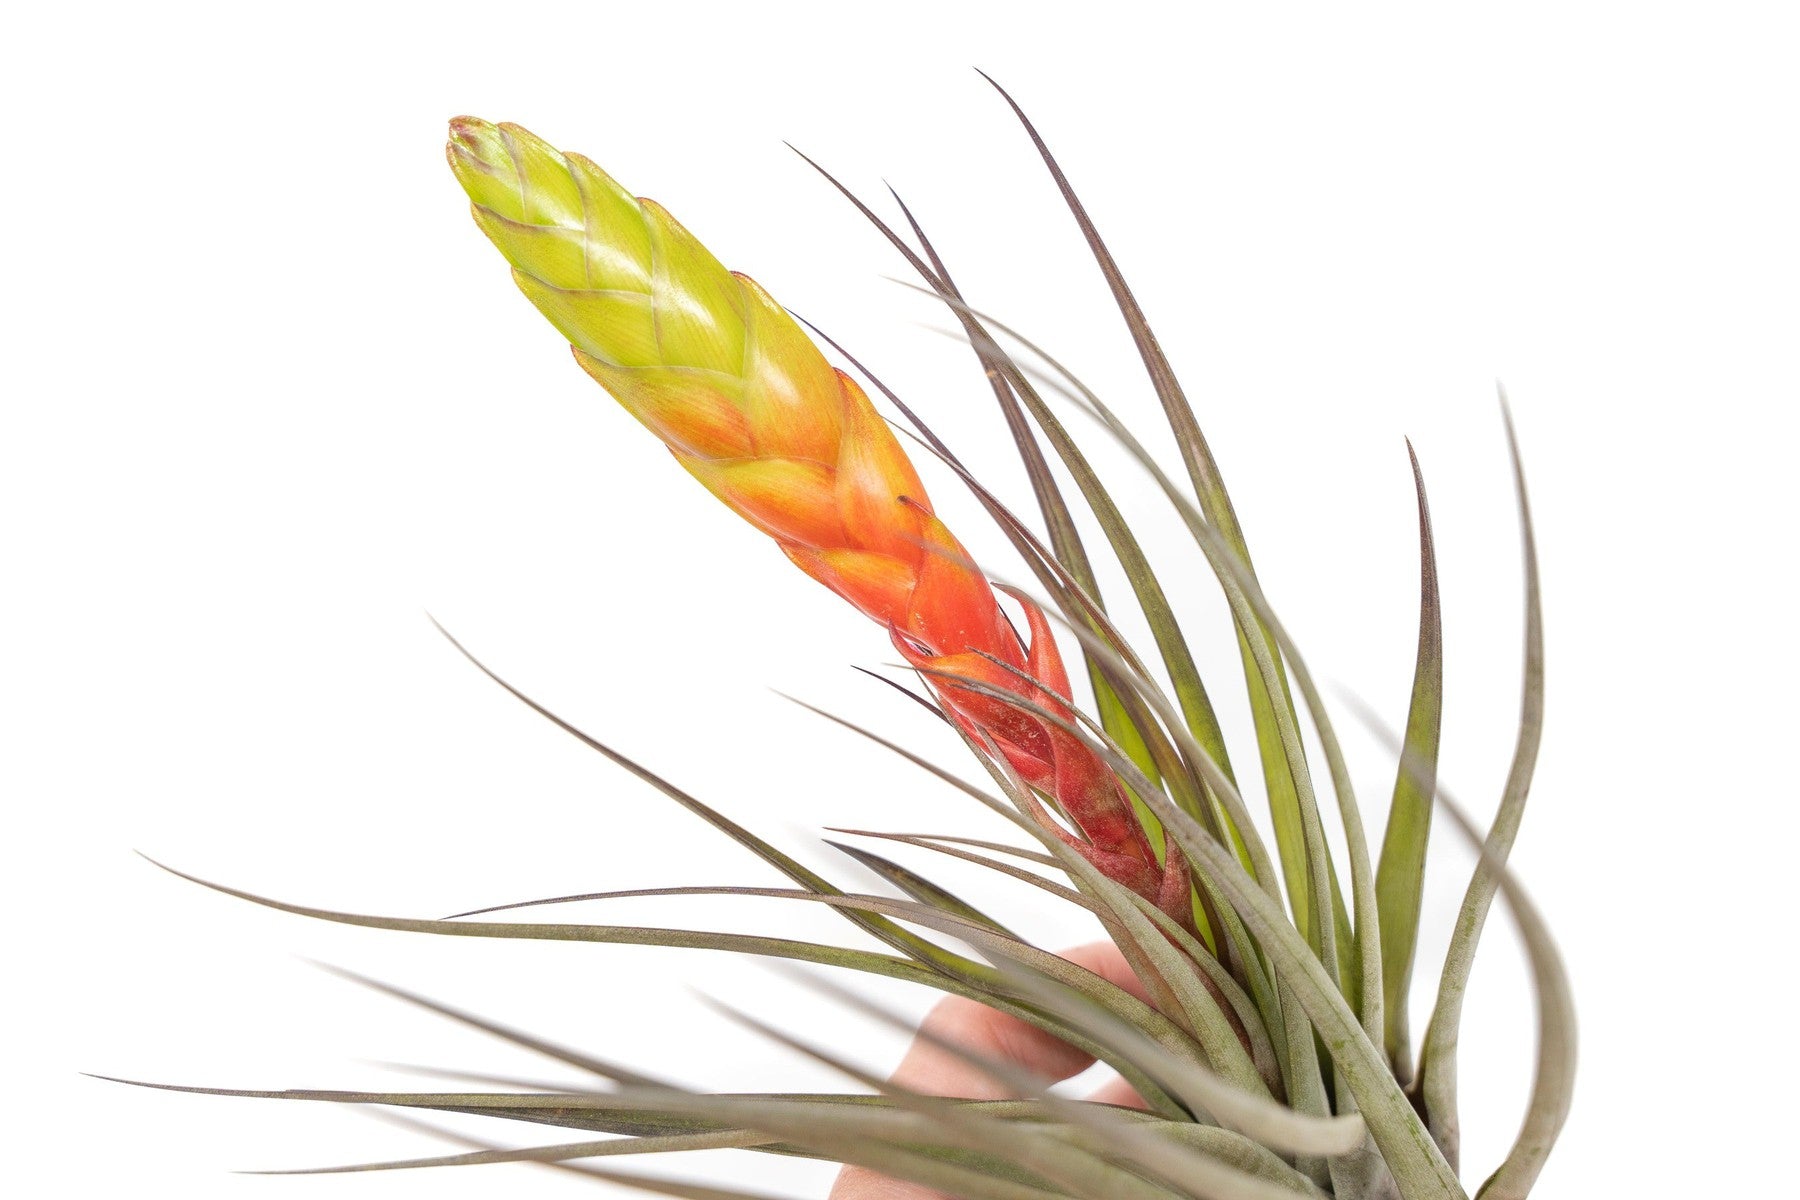 SALE - Large Tillandsia Fasciculata Tricolor Air Plants - Set of 5 or 10 - 50% Off-airplant-The Succulent Source